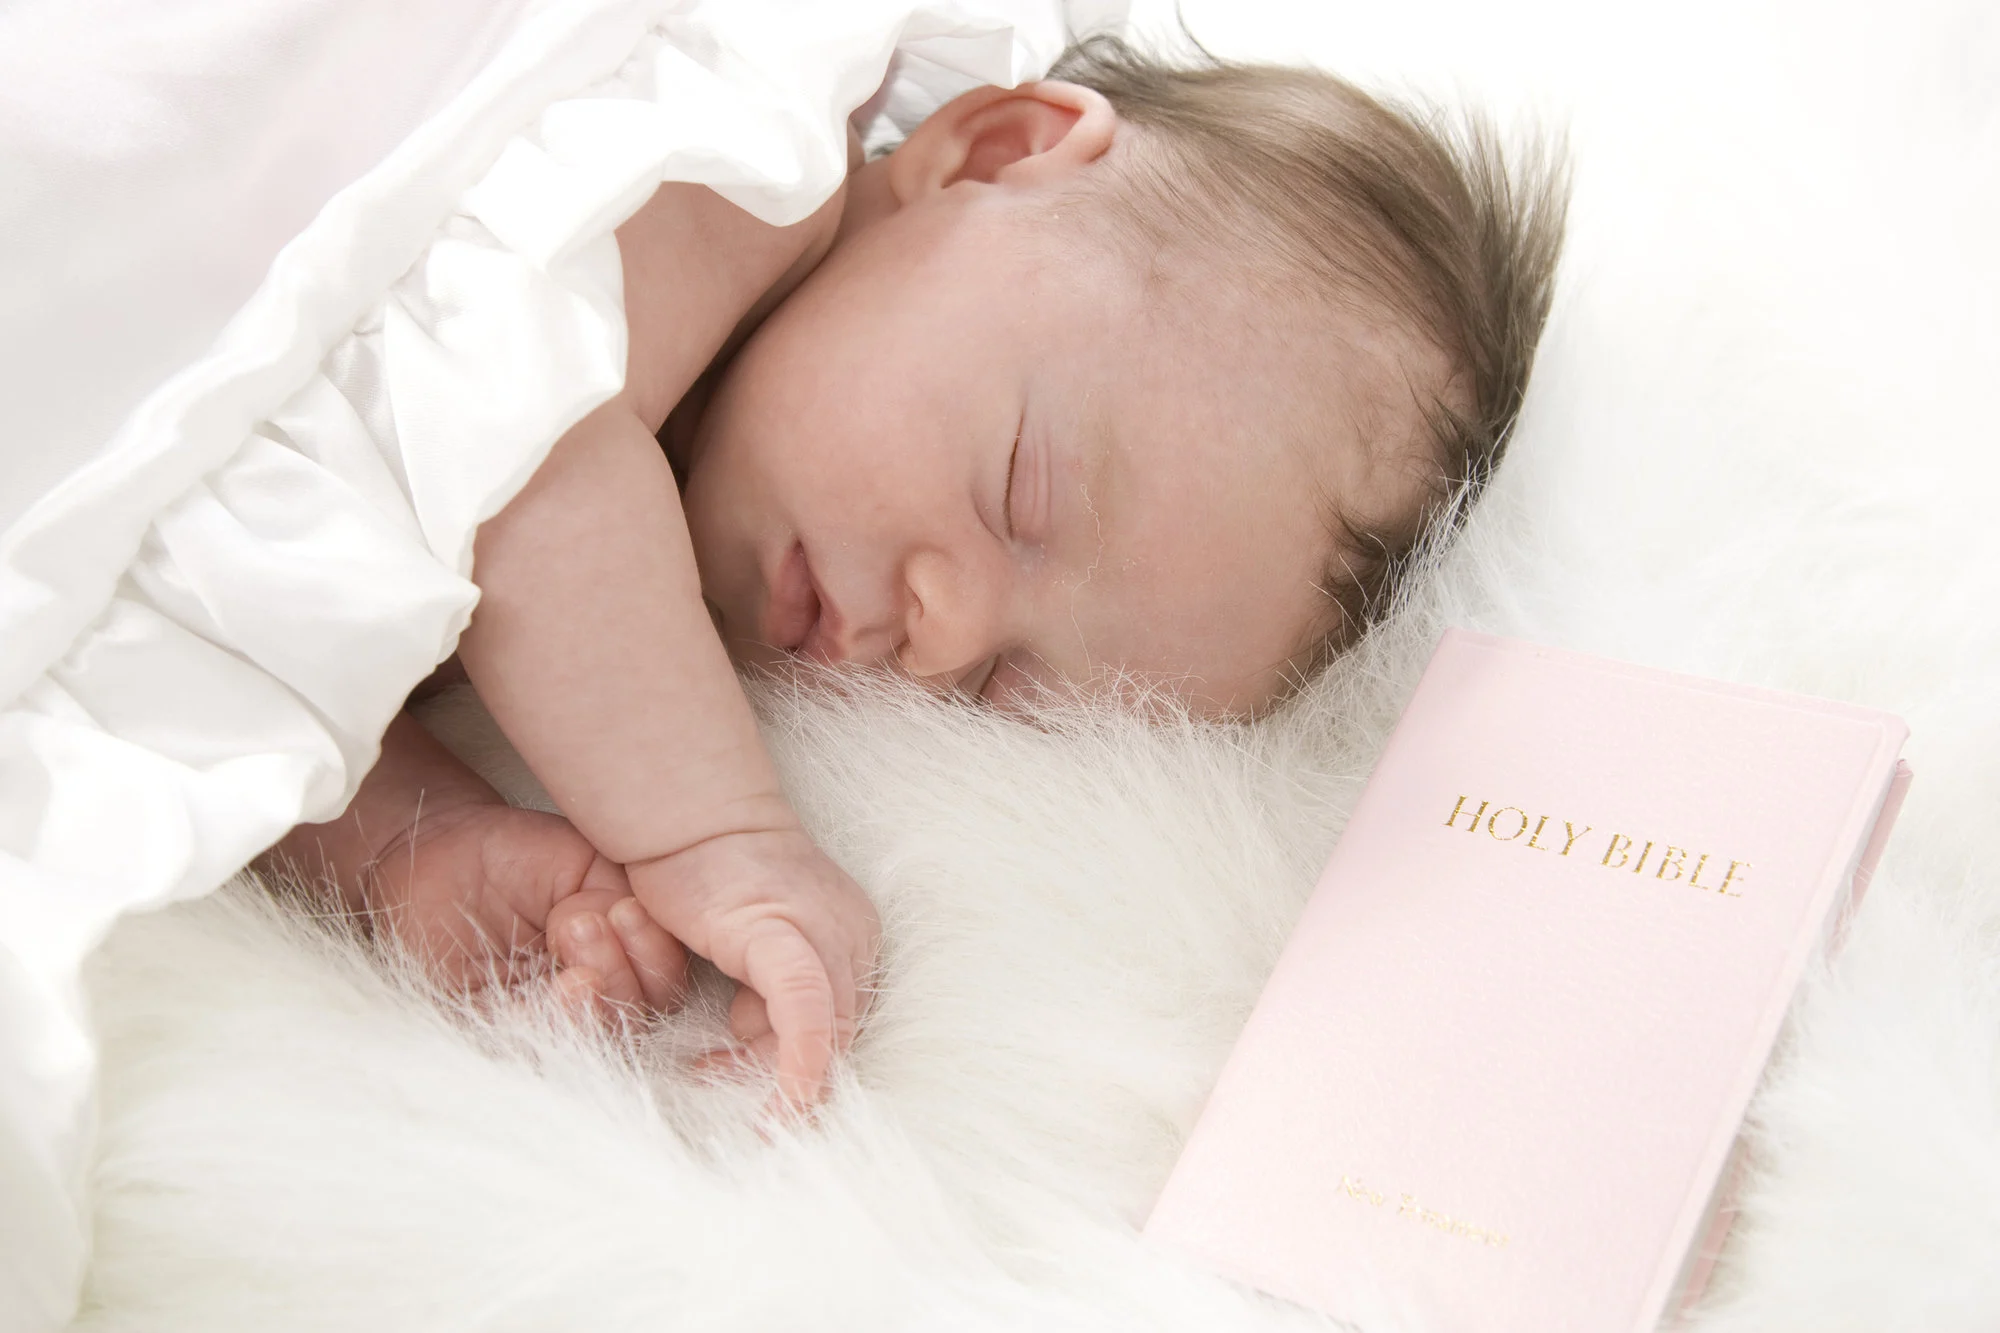 Precious newborn baby sleeping peacefully with pink Bible